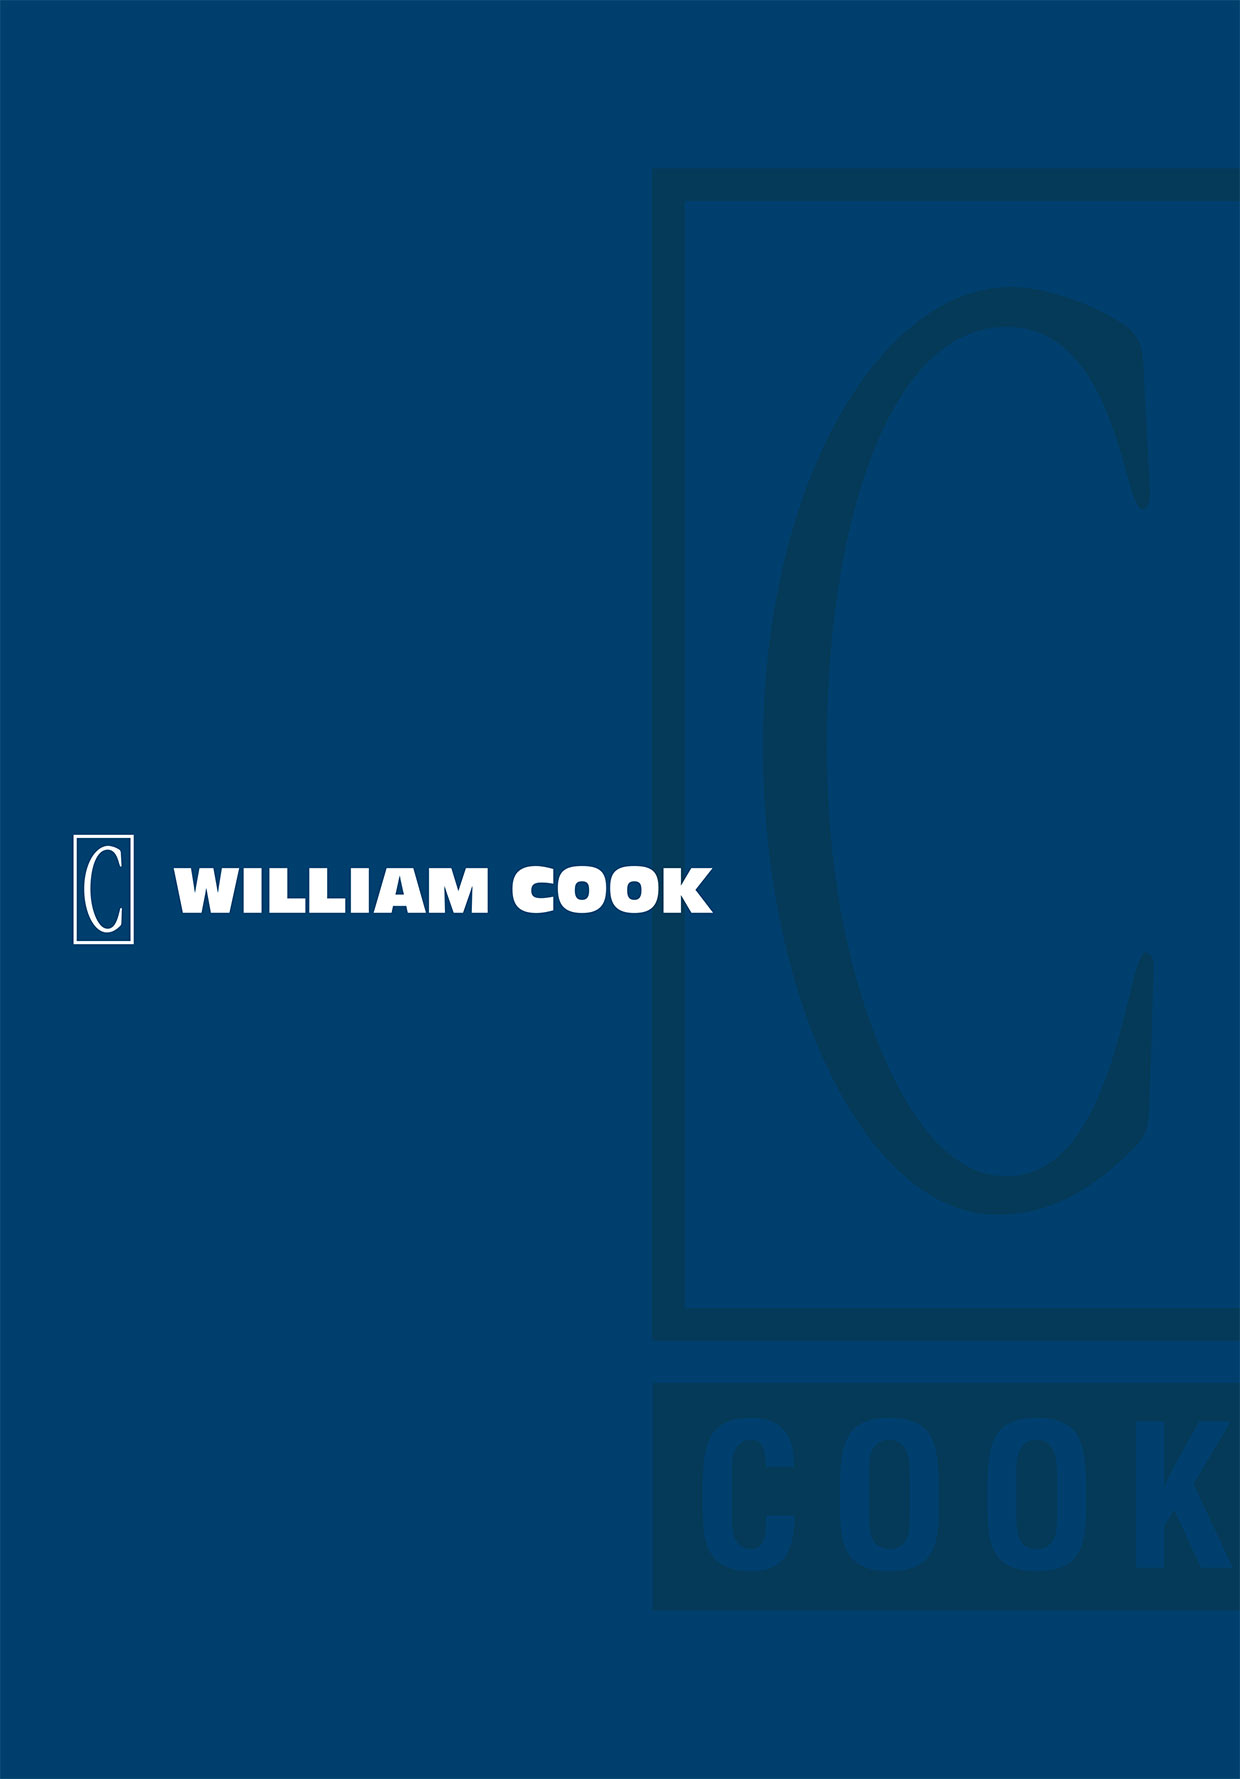 William Cook Group brochure